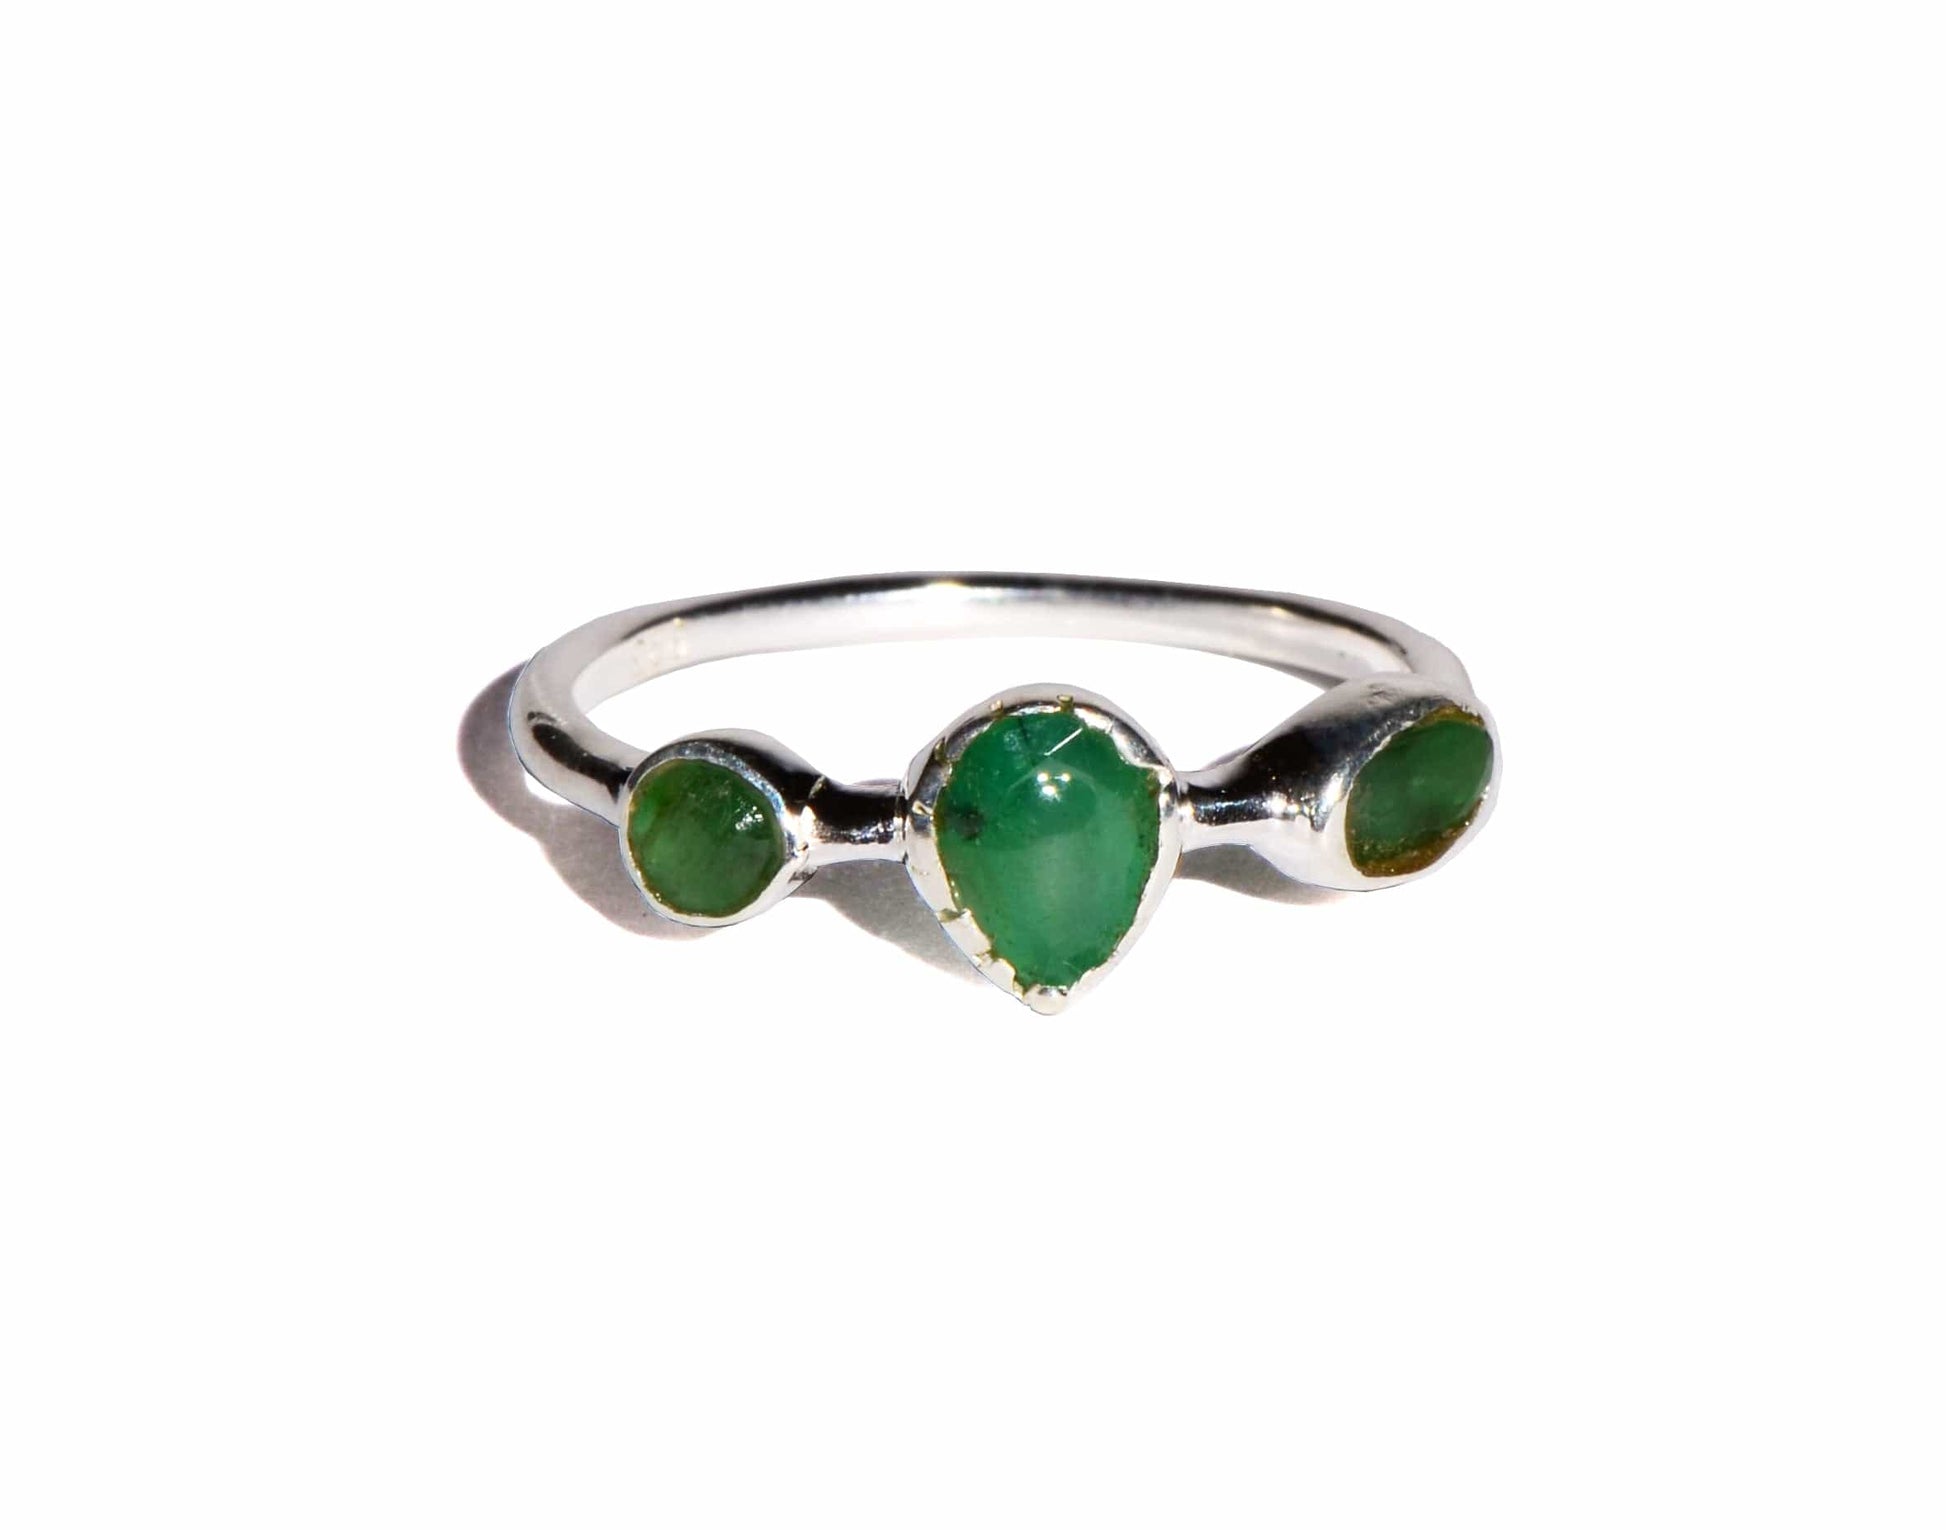 Emerald Sterling Silver Ring - Teardrop Crystal